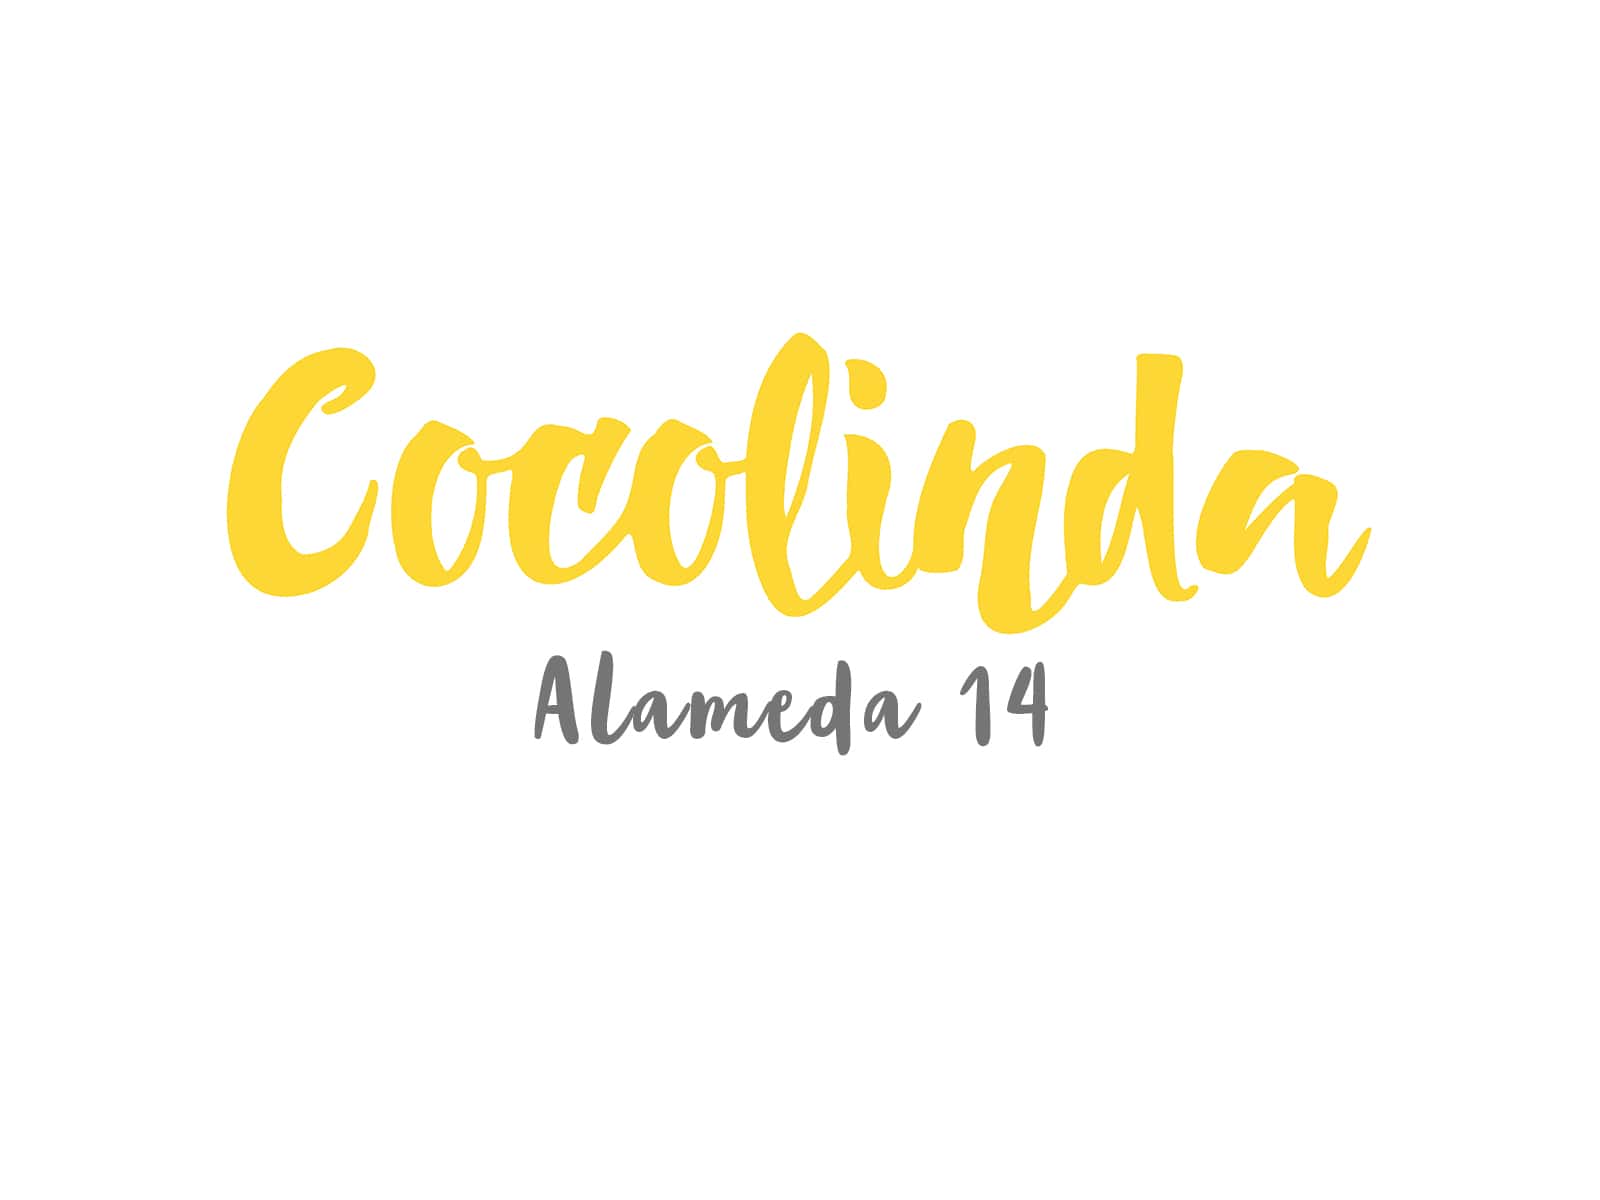 Cocolinda Alameda 14